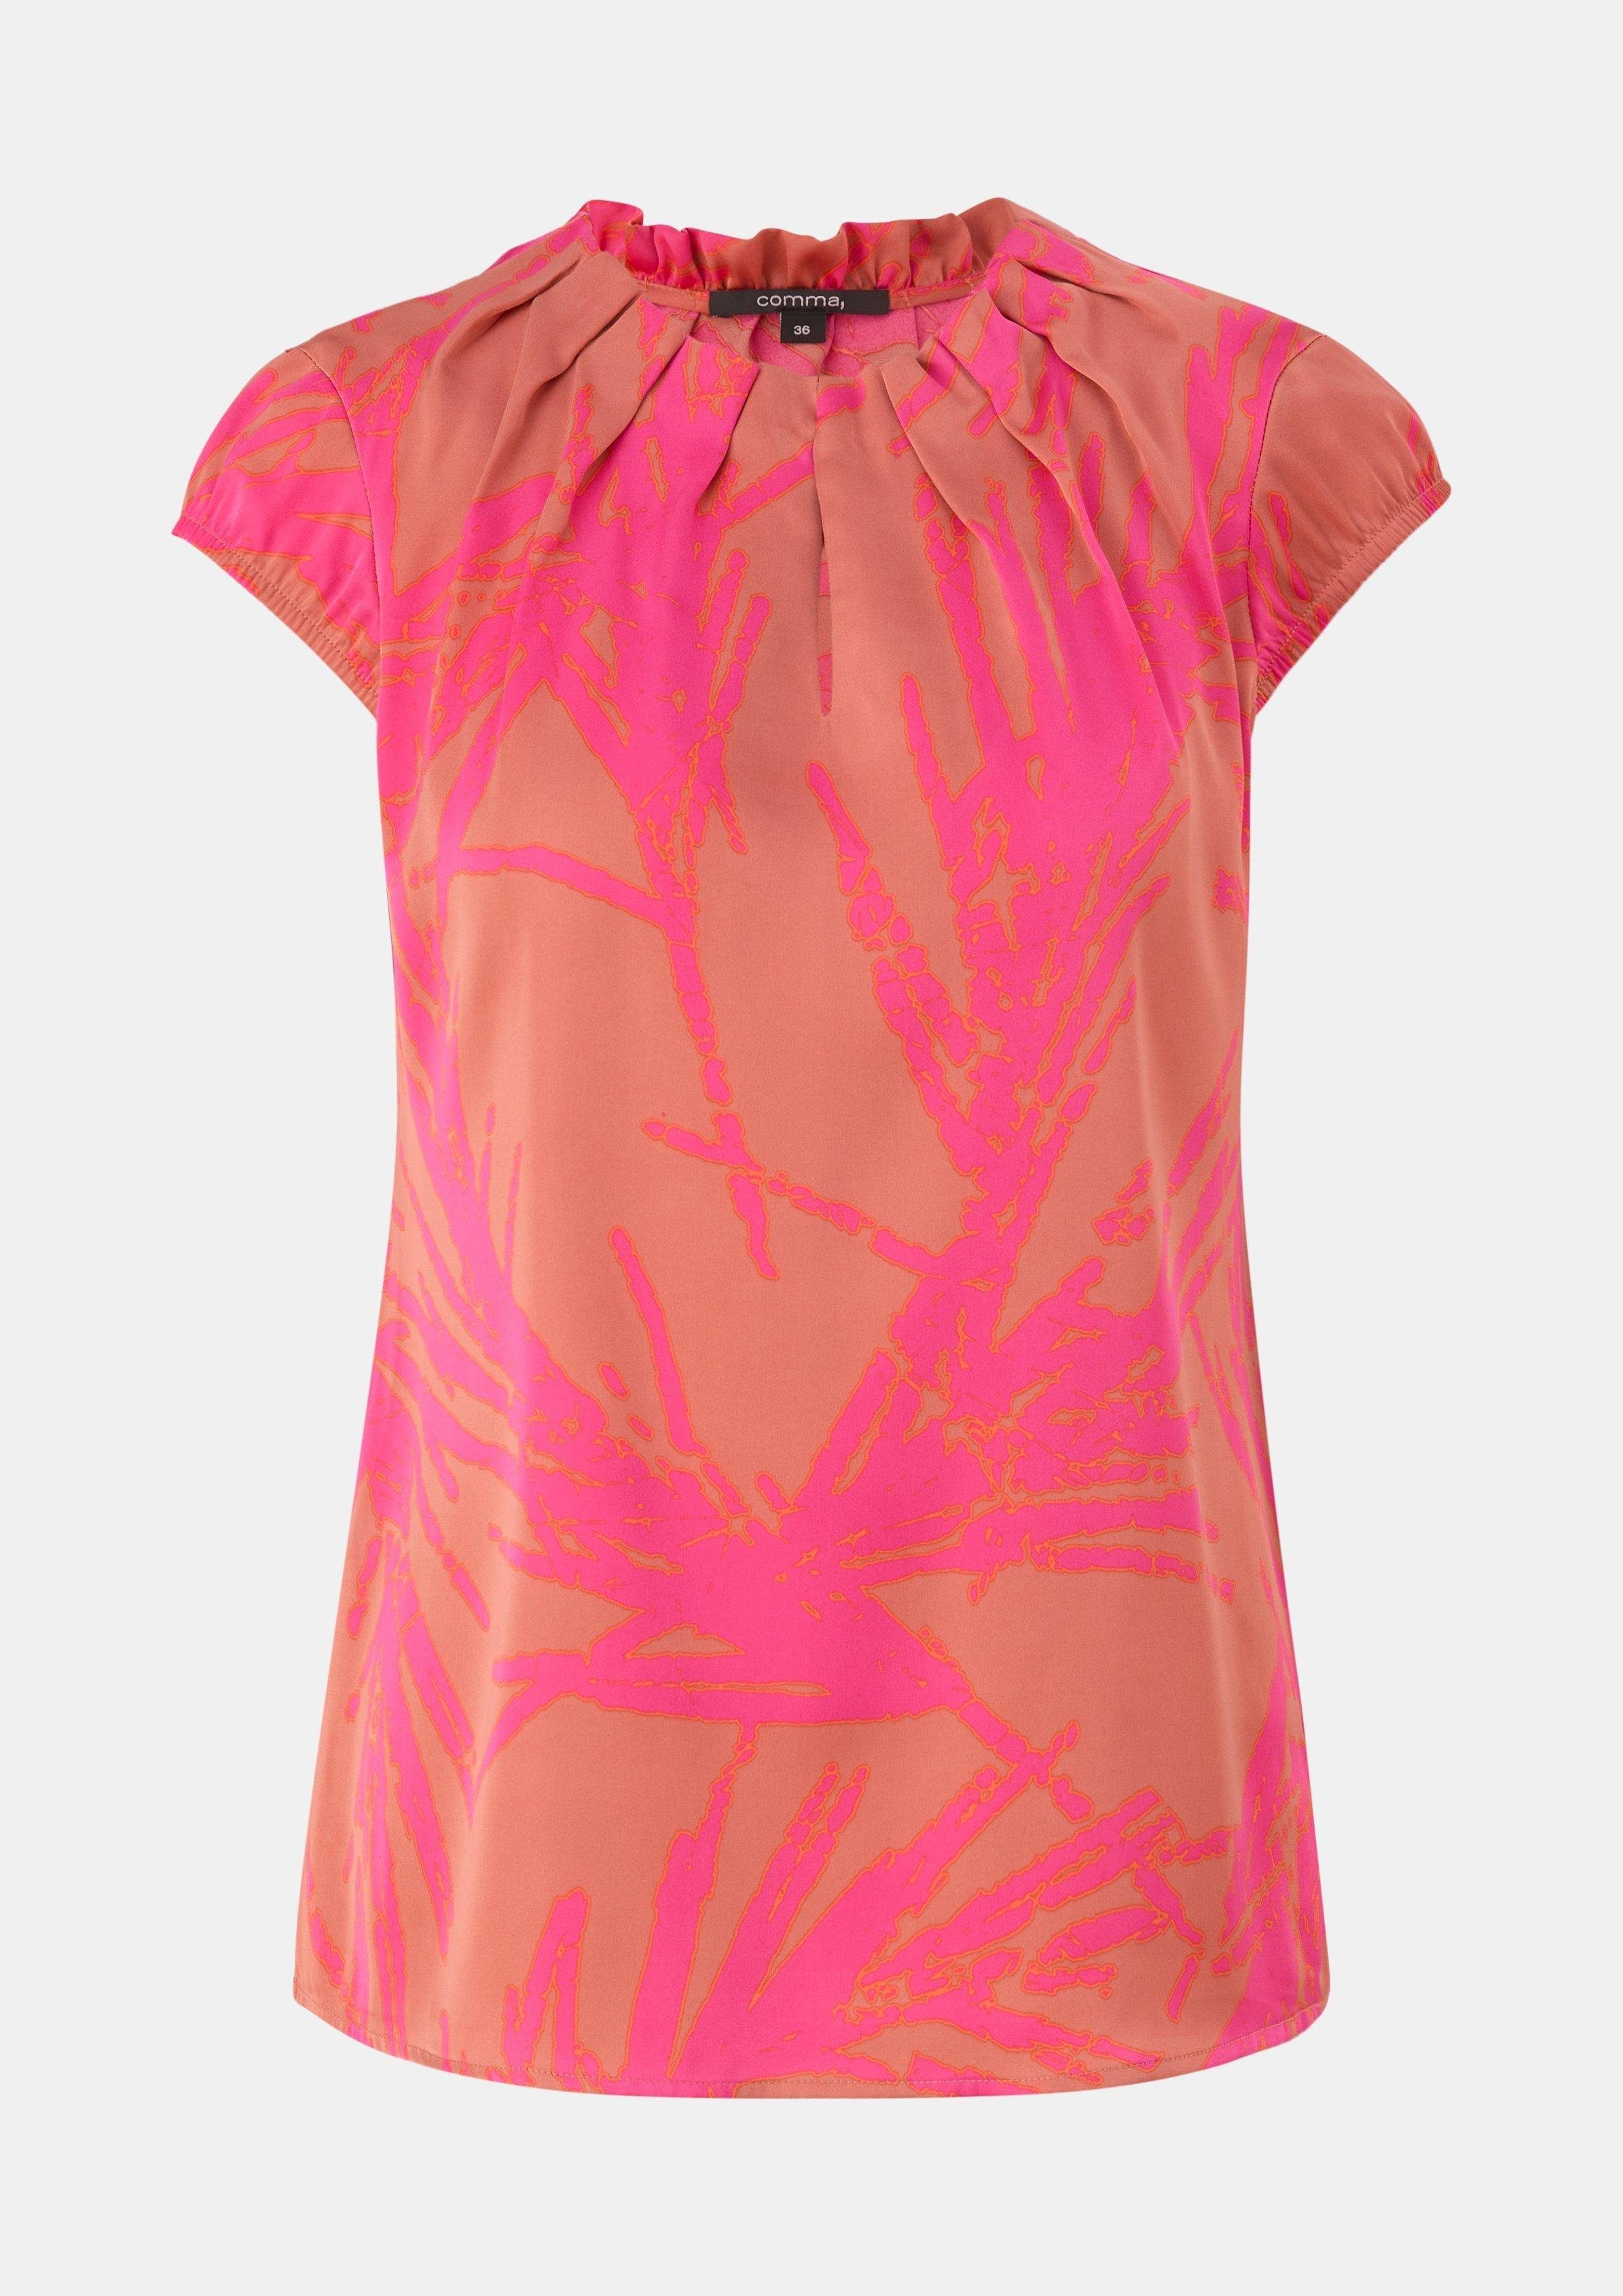 Raffung All-over-Print Bluse pink Kurzarmbluse mit Comma